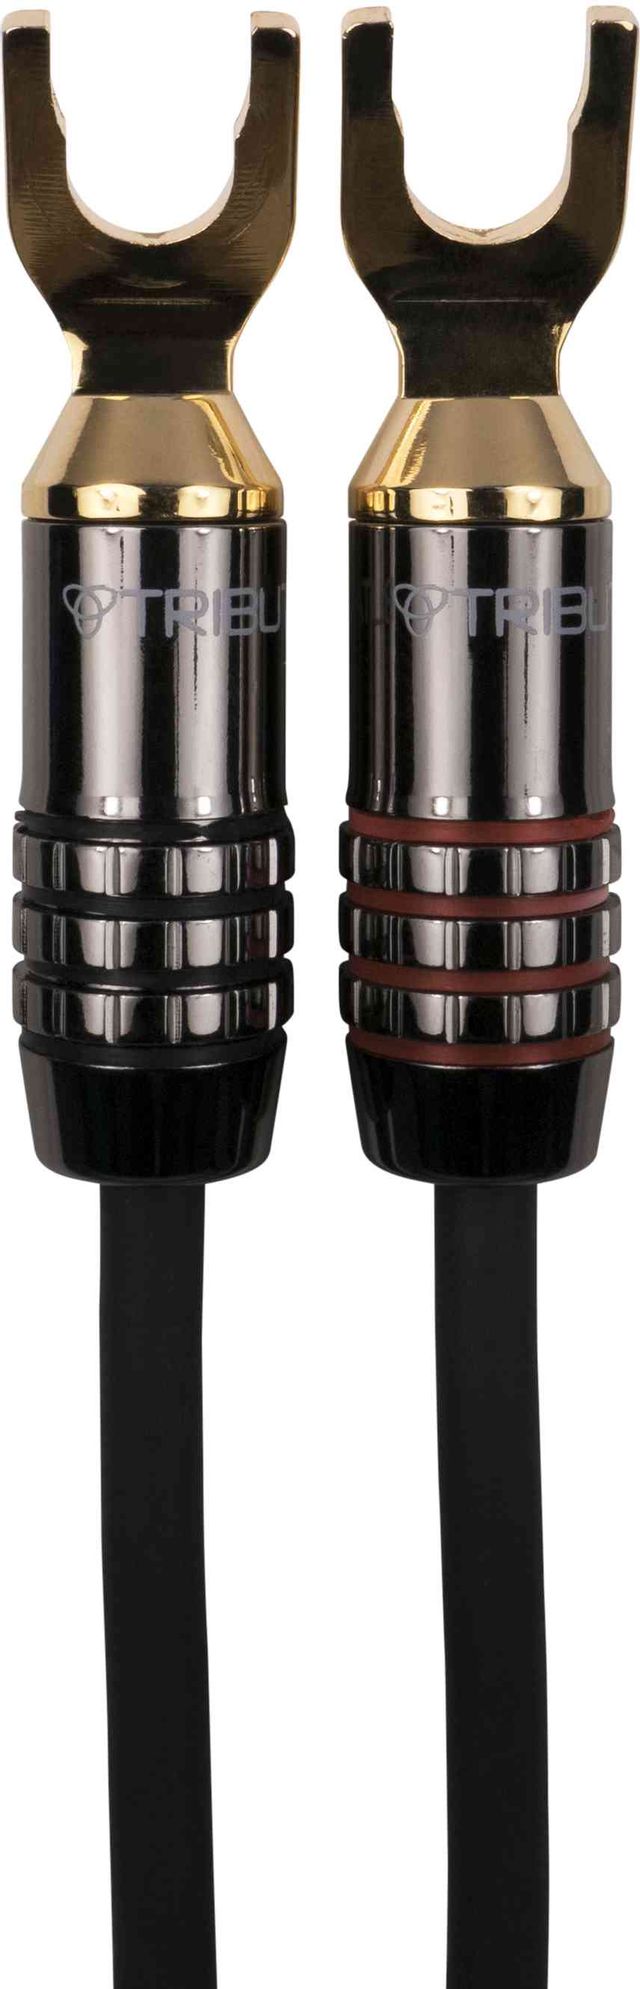 Tributaries® Series 8 8 Ft. Spade Lugs Speaker Cable